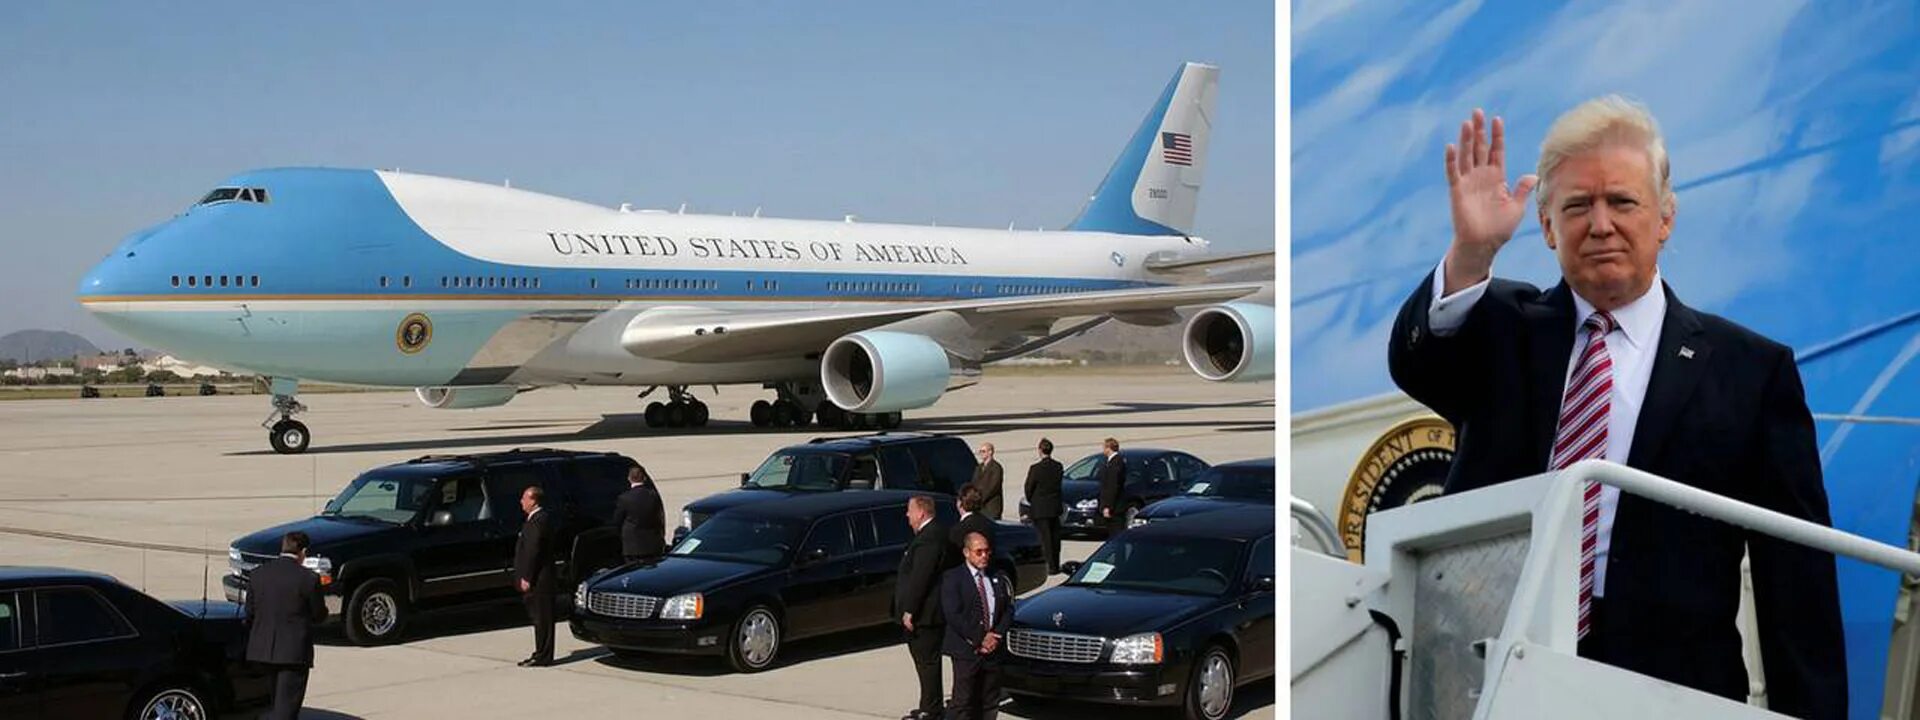 Боинг 747 президента США. Борт 1 президента США. Самолет президента США Air Force one. Борт номер 1 президента Казахстана.